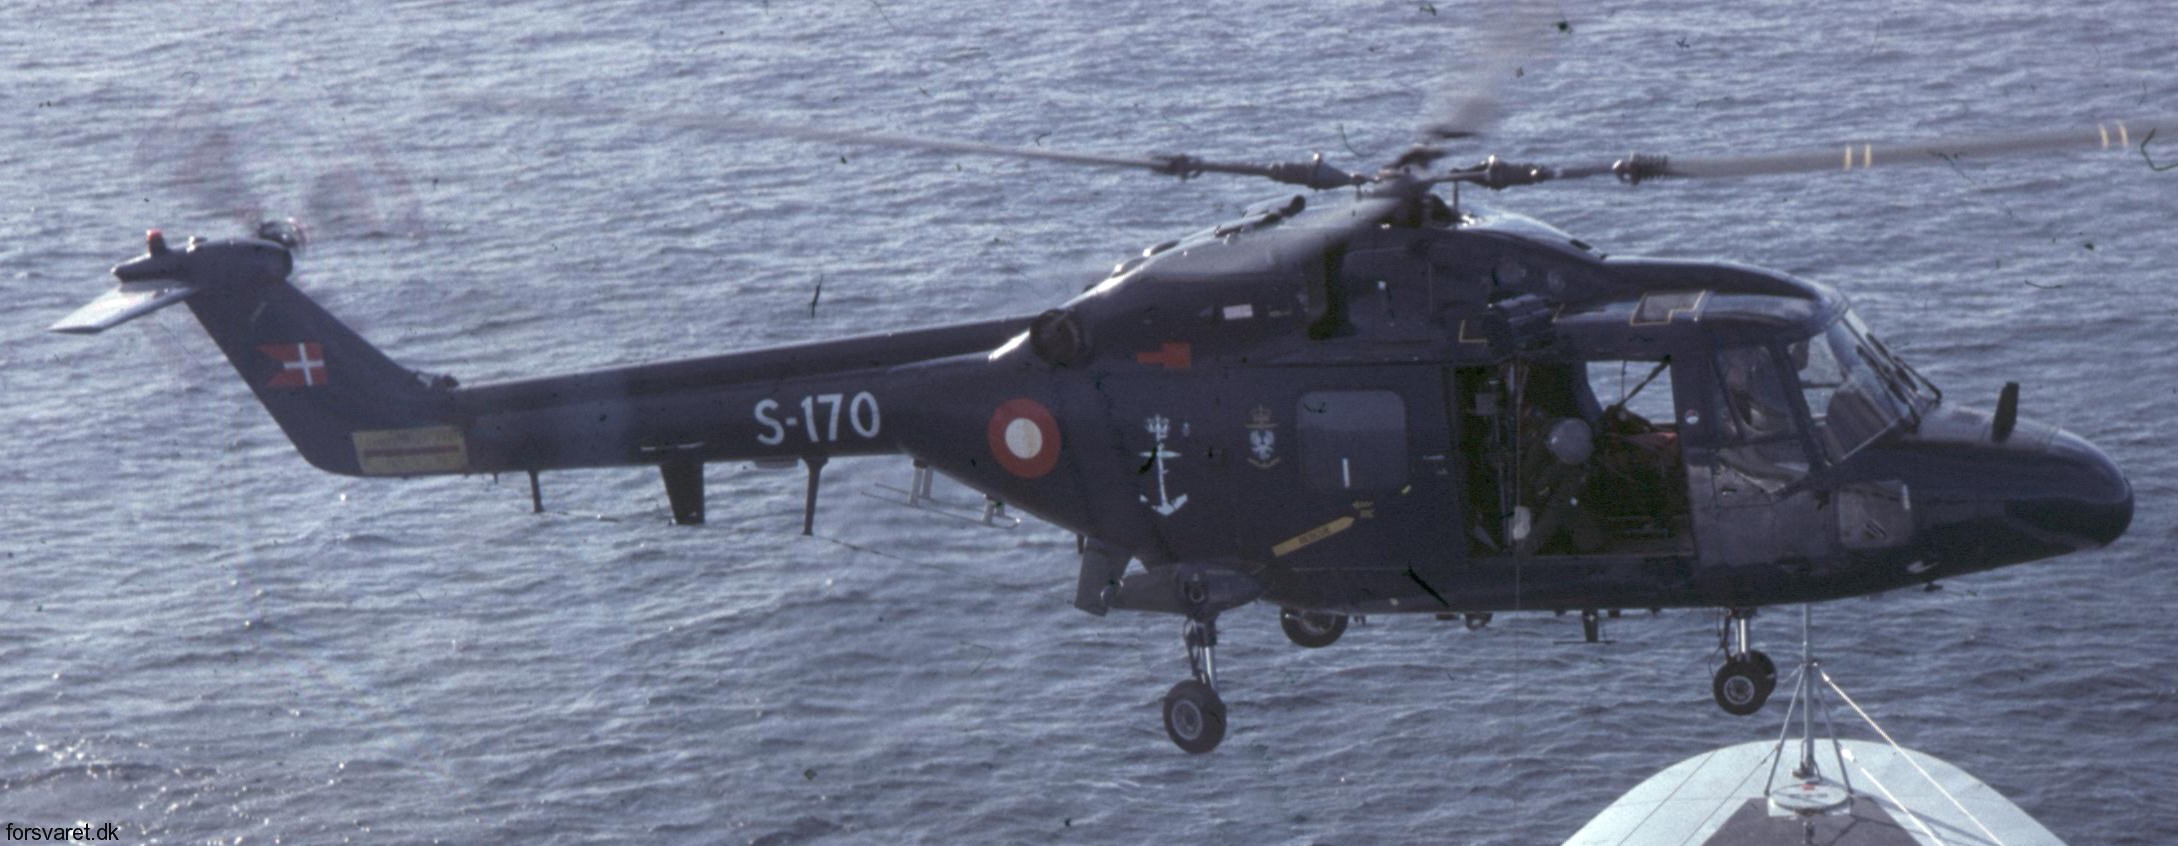 lynx mk.80 mk.90b helicopter westland royal danish navy air force kongelige danske marine flyvevabnet s-170 13